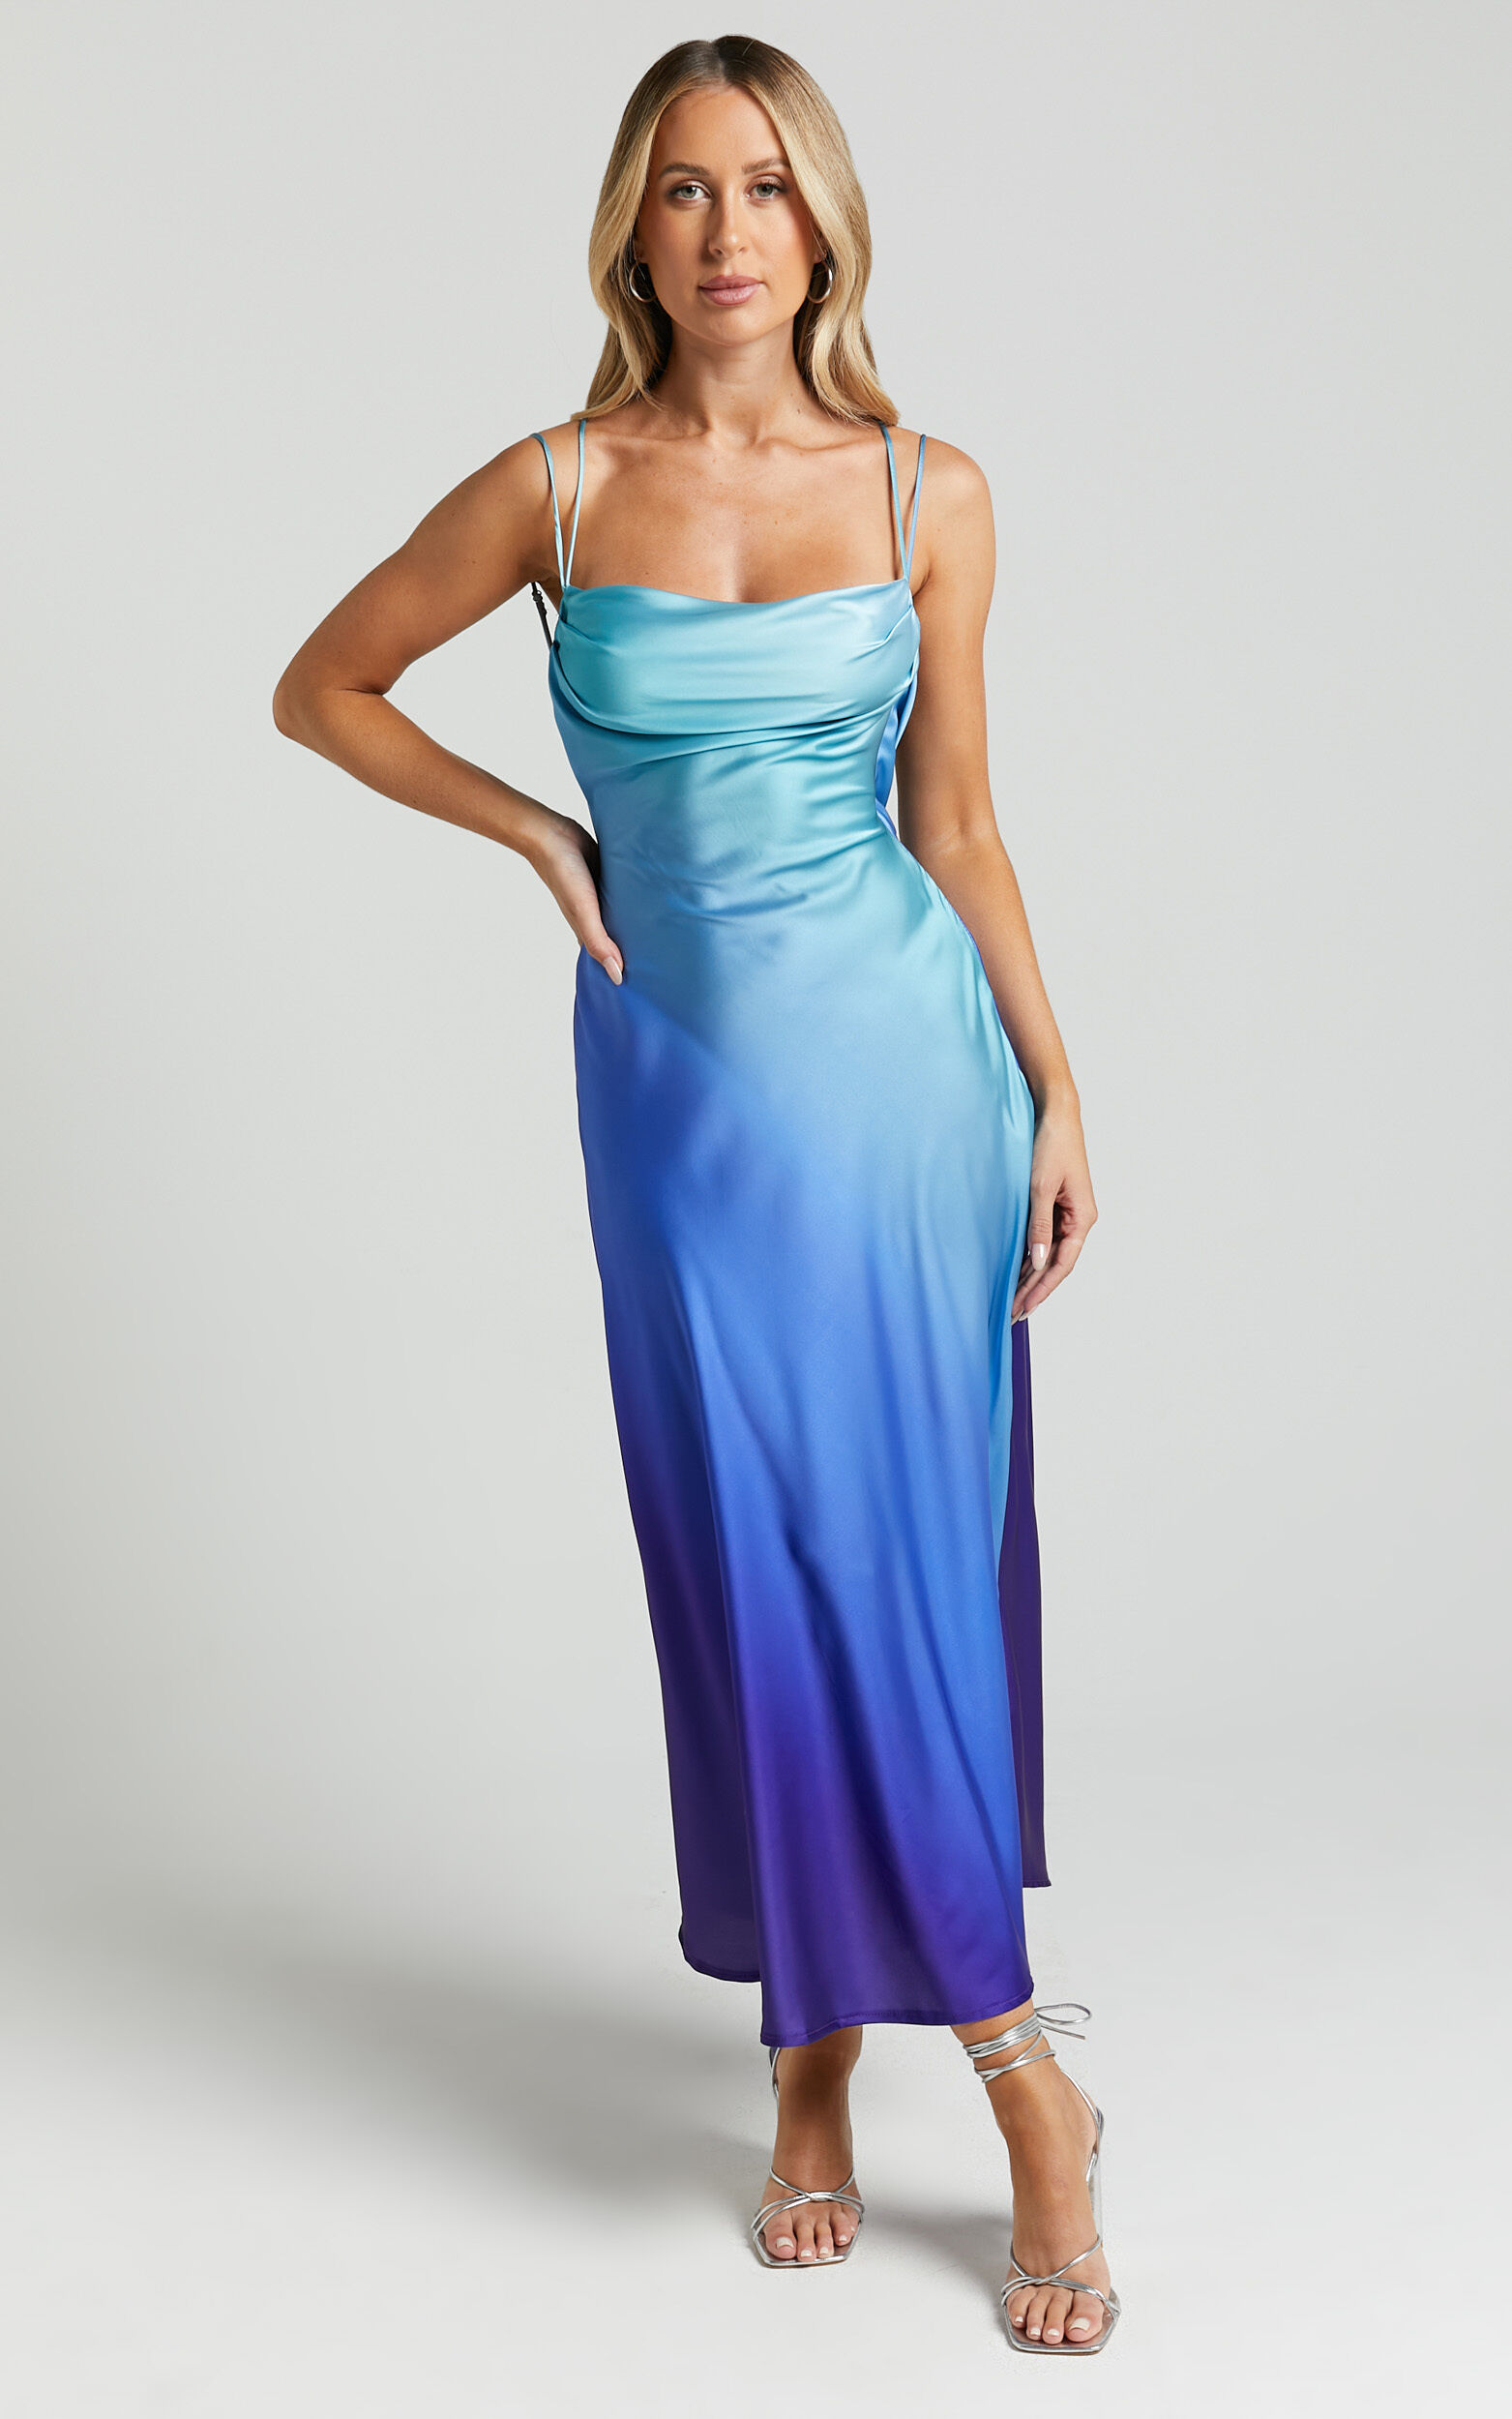 Sumara Midi Dress - Cowl Neck Satin Dress in Blue Ombre - 06, BLU1